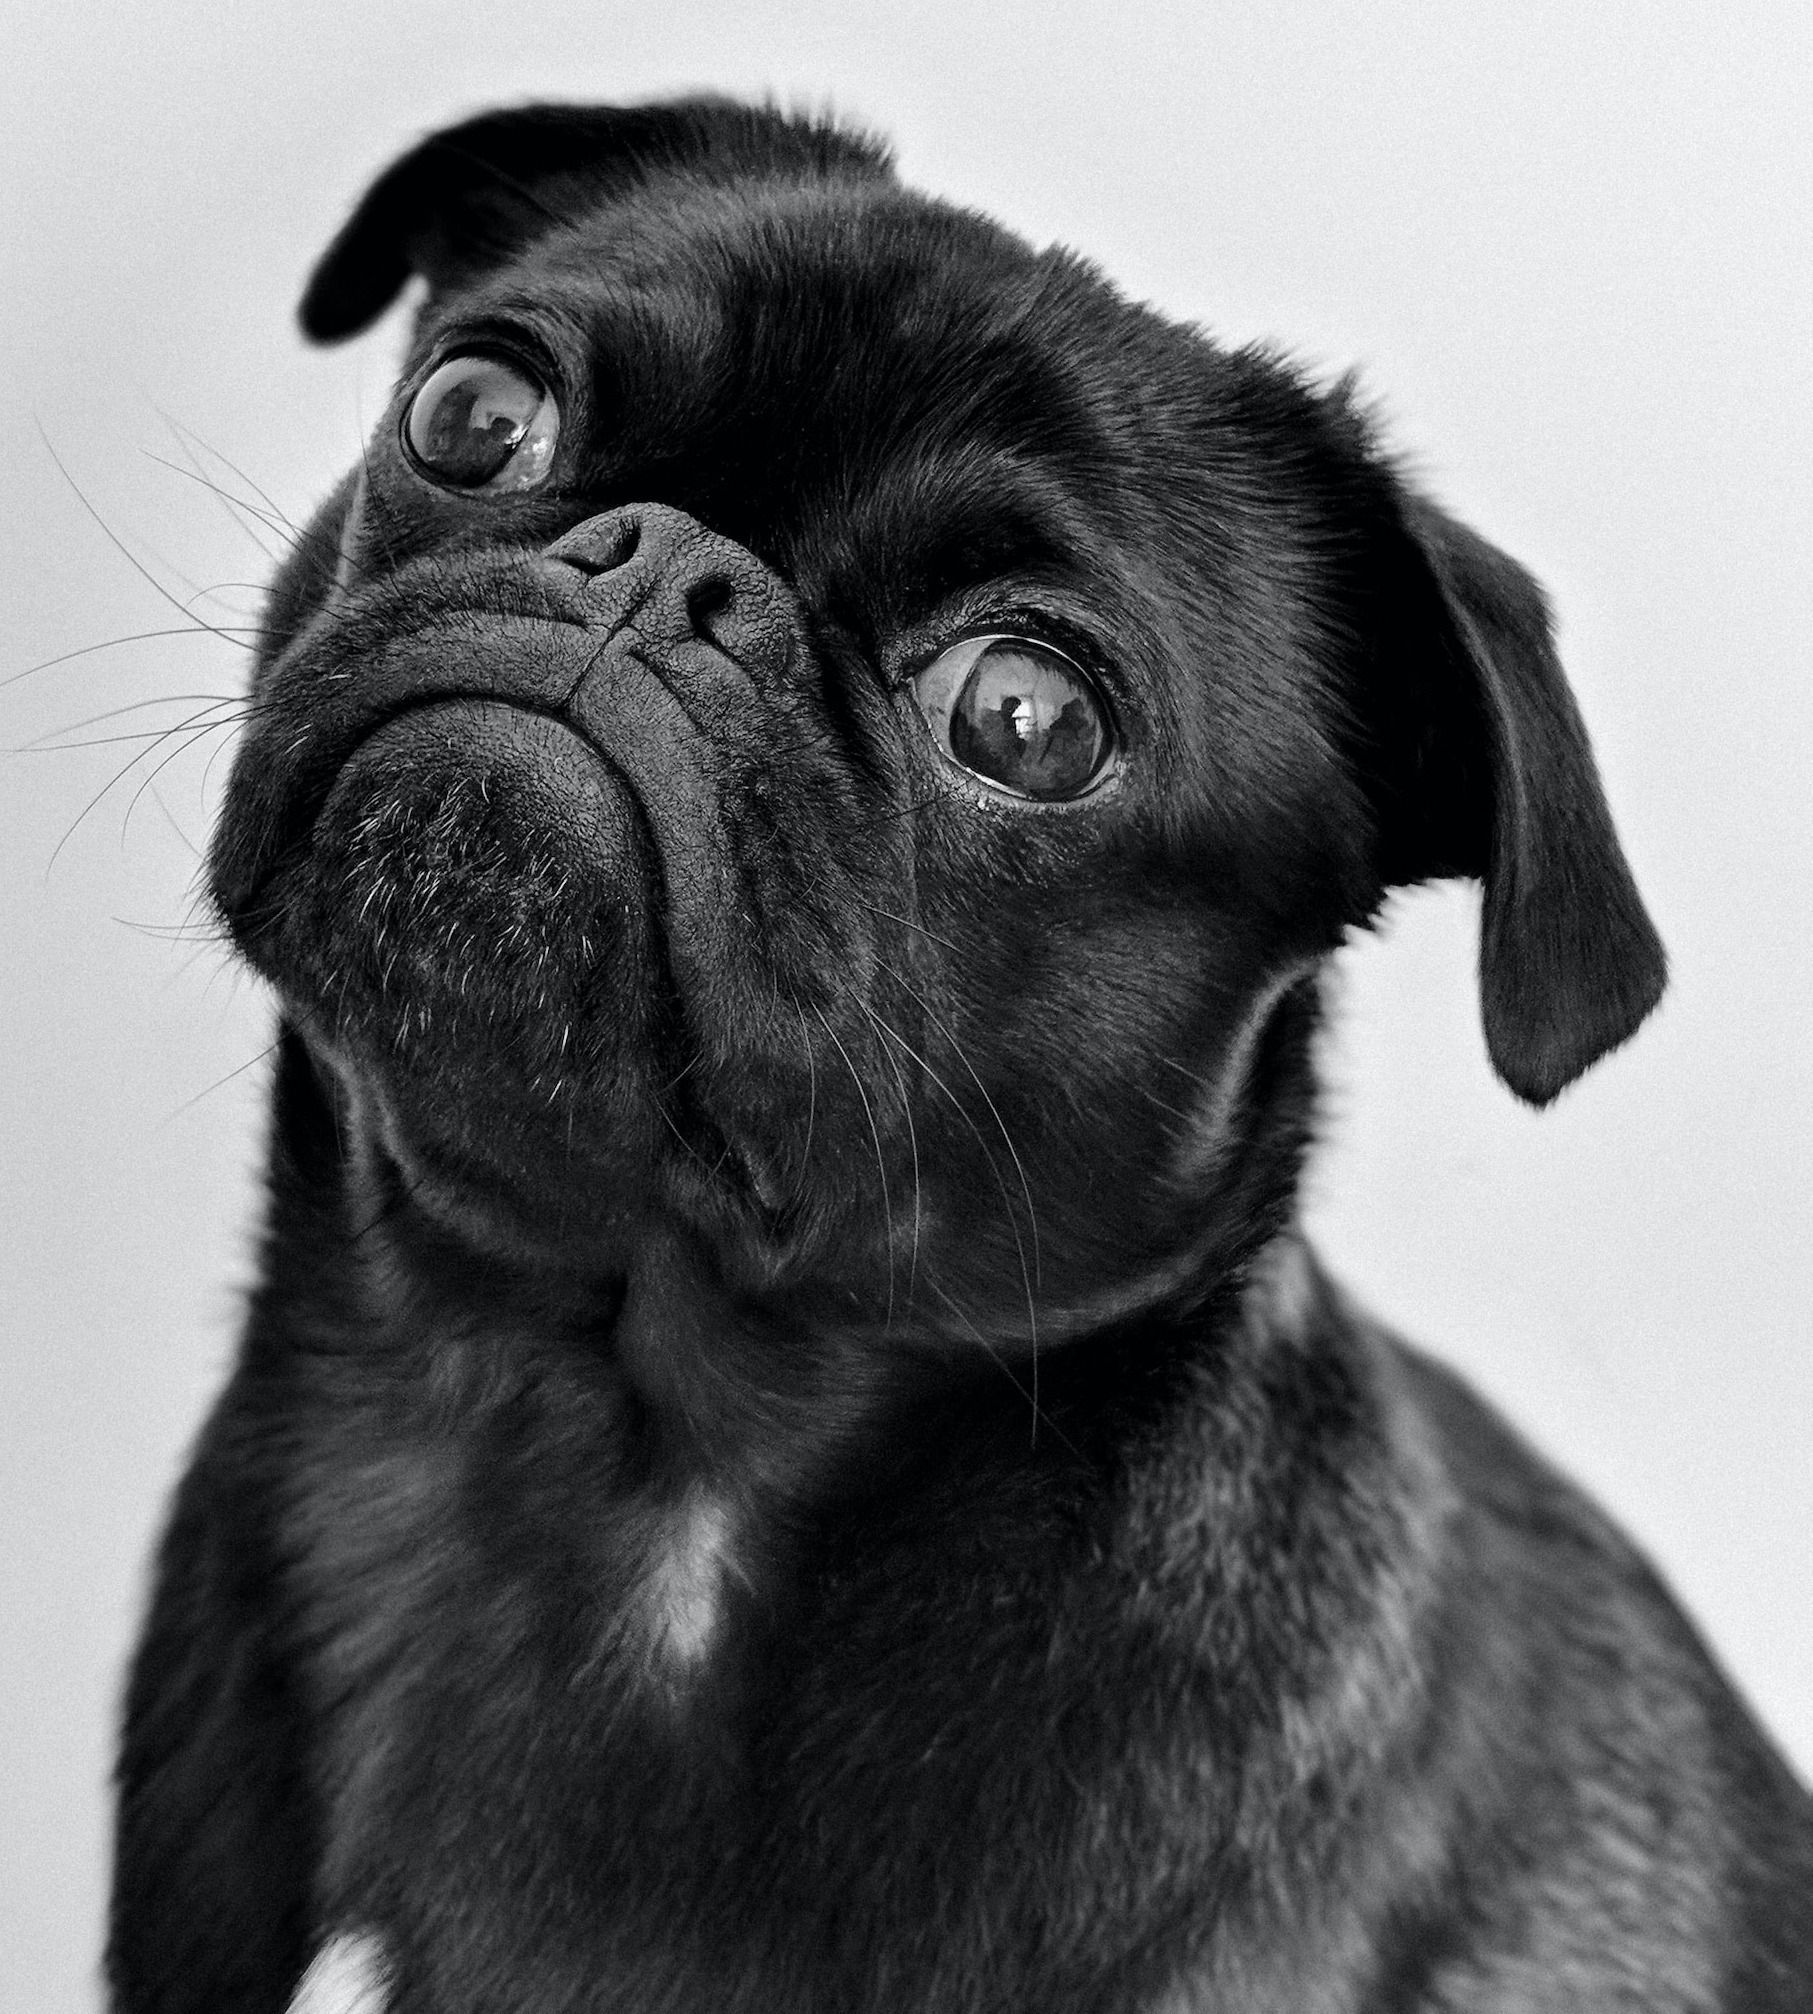 a small black dog looking up at the camera